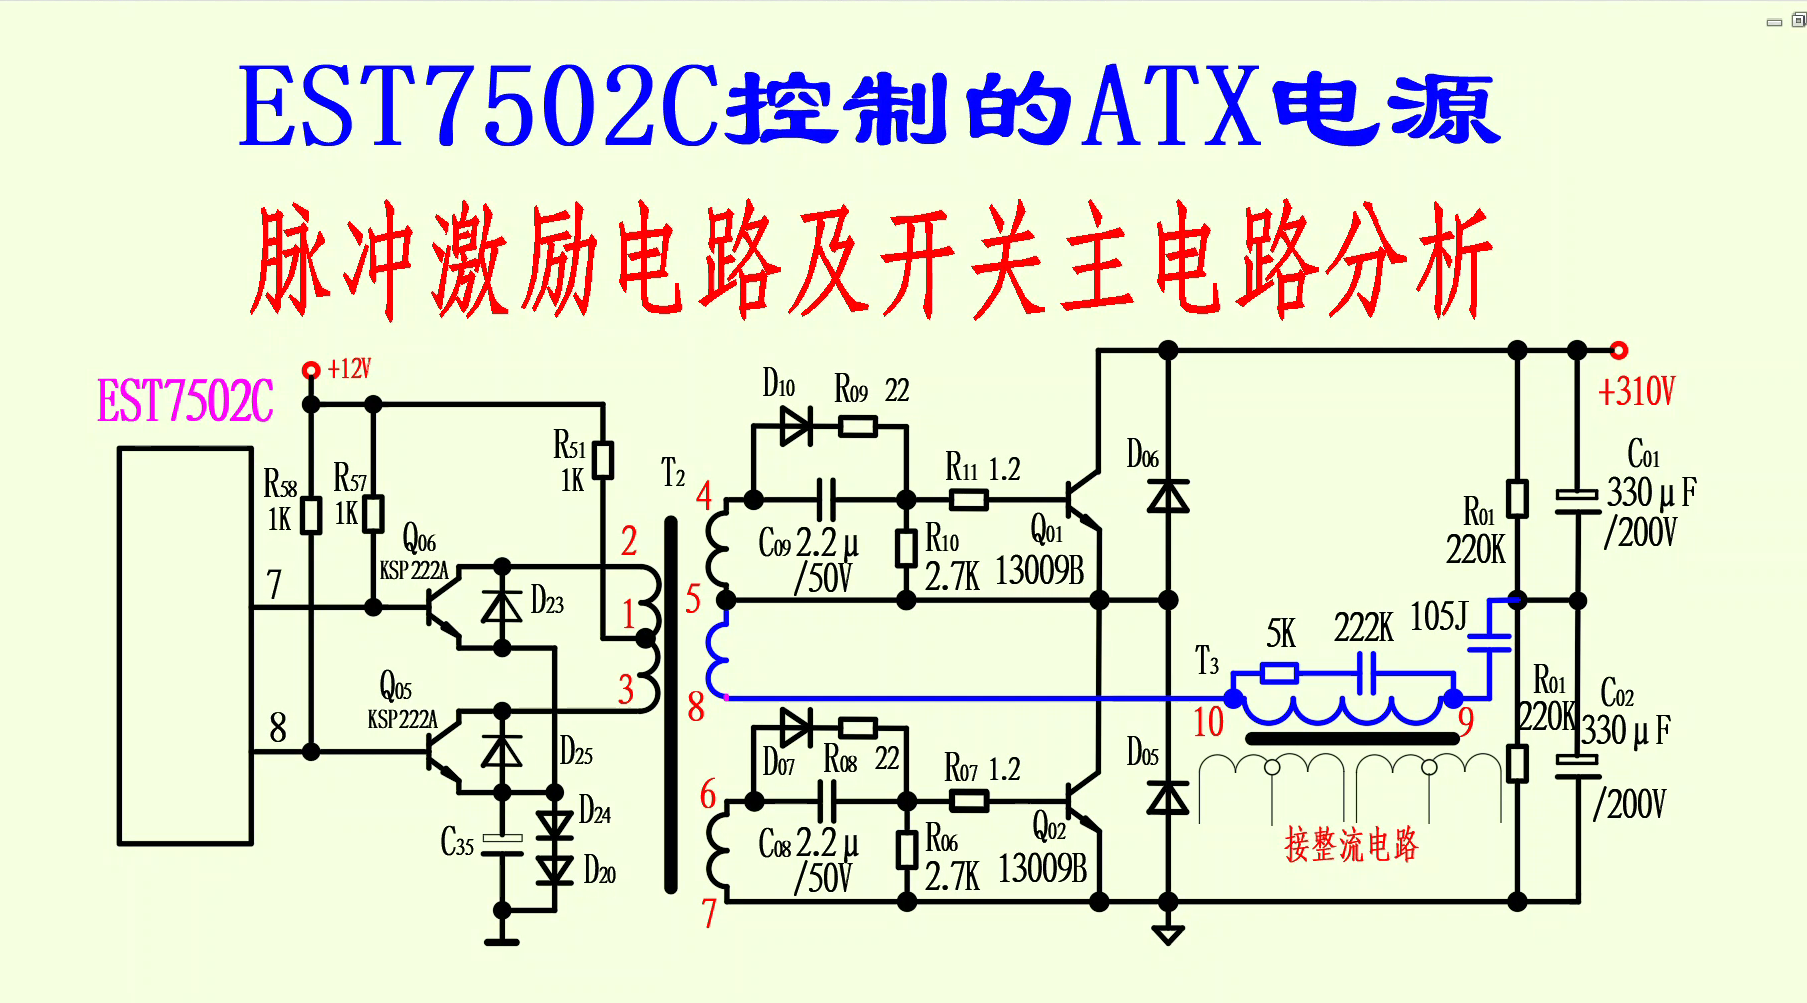 EST7502C控制的ATX电源—推挽激励及半桥式主开关电路